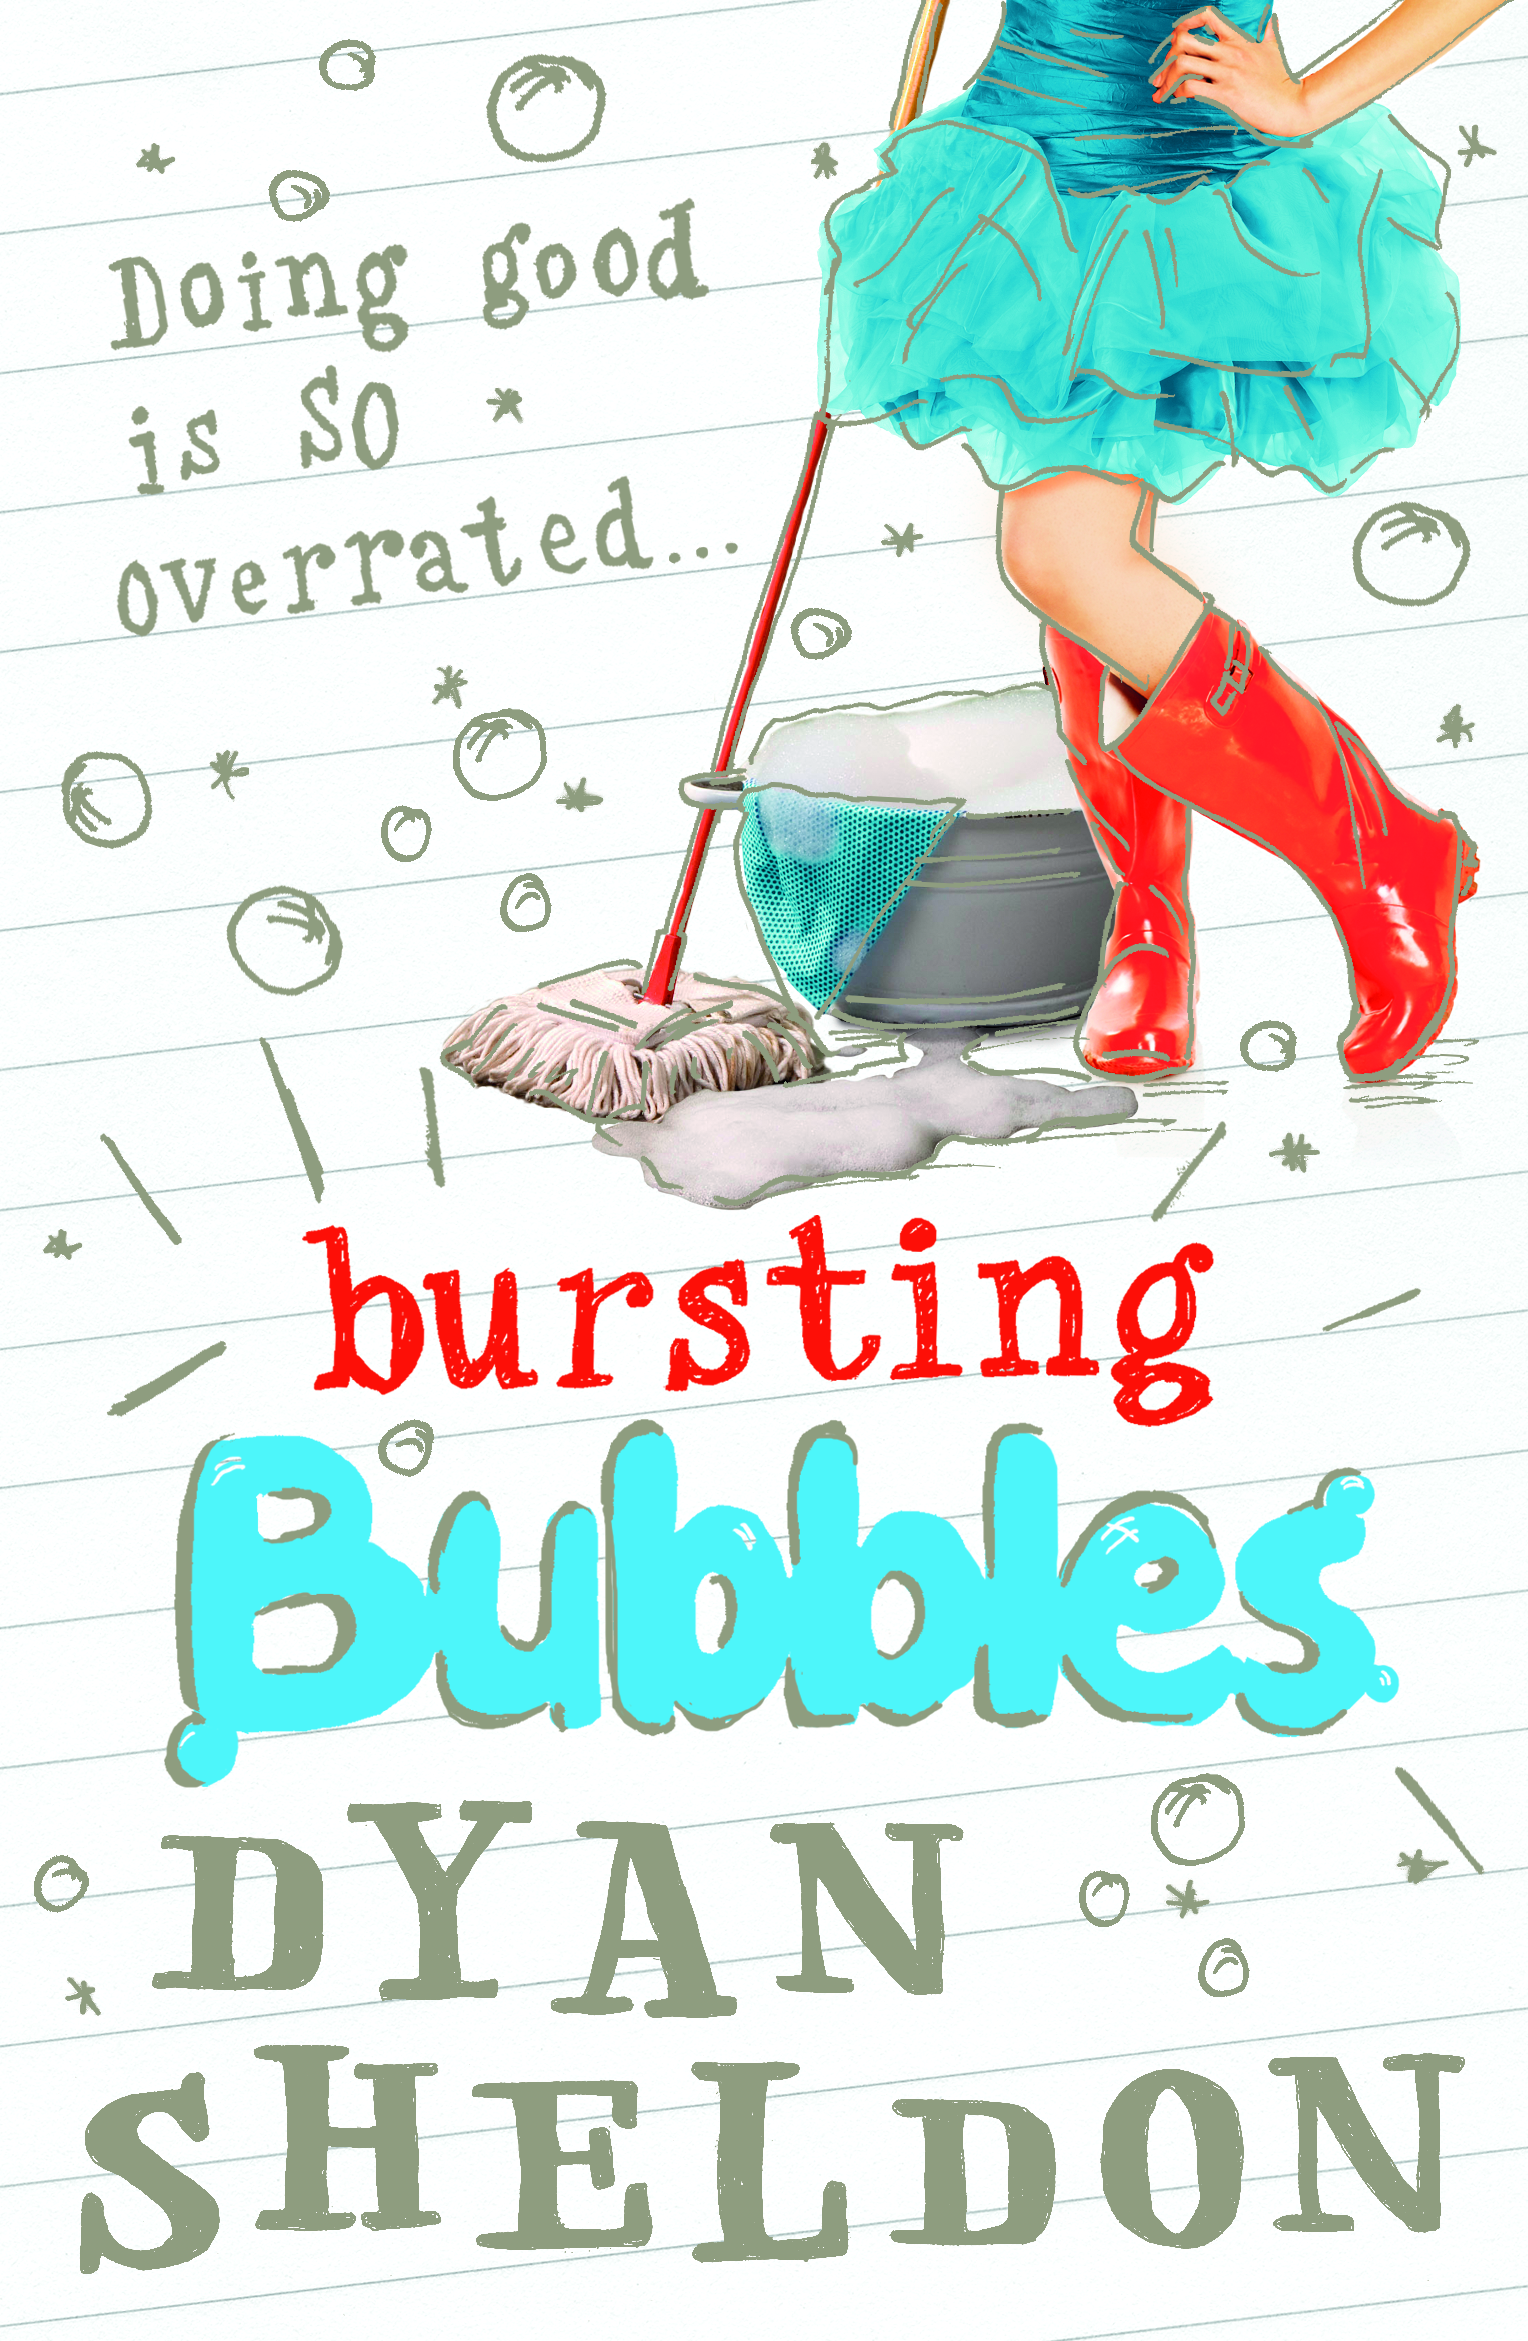 Bursting-Bubbles